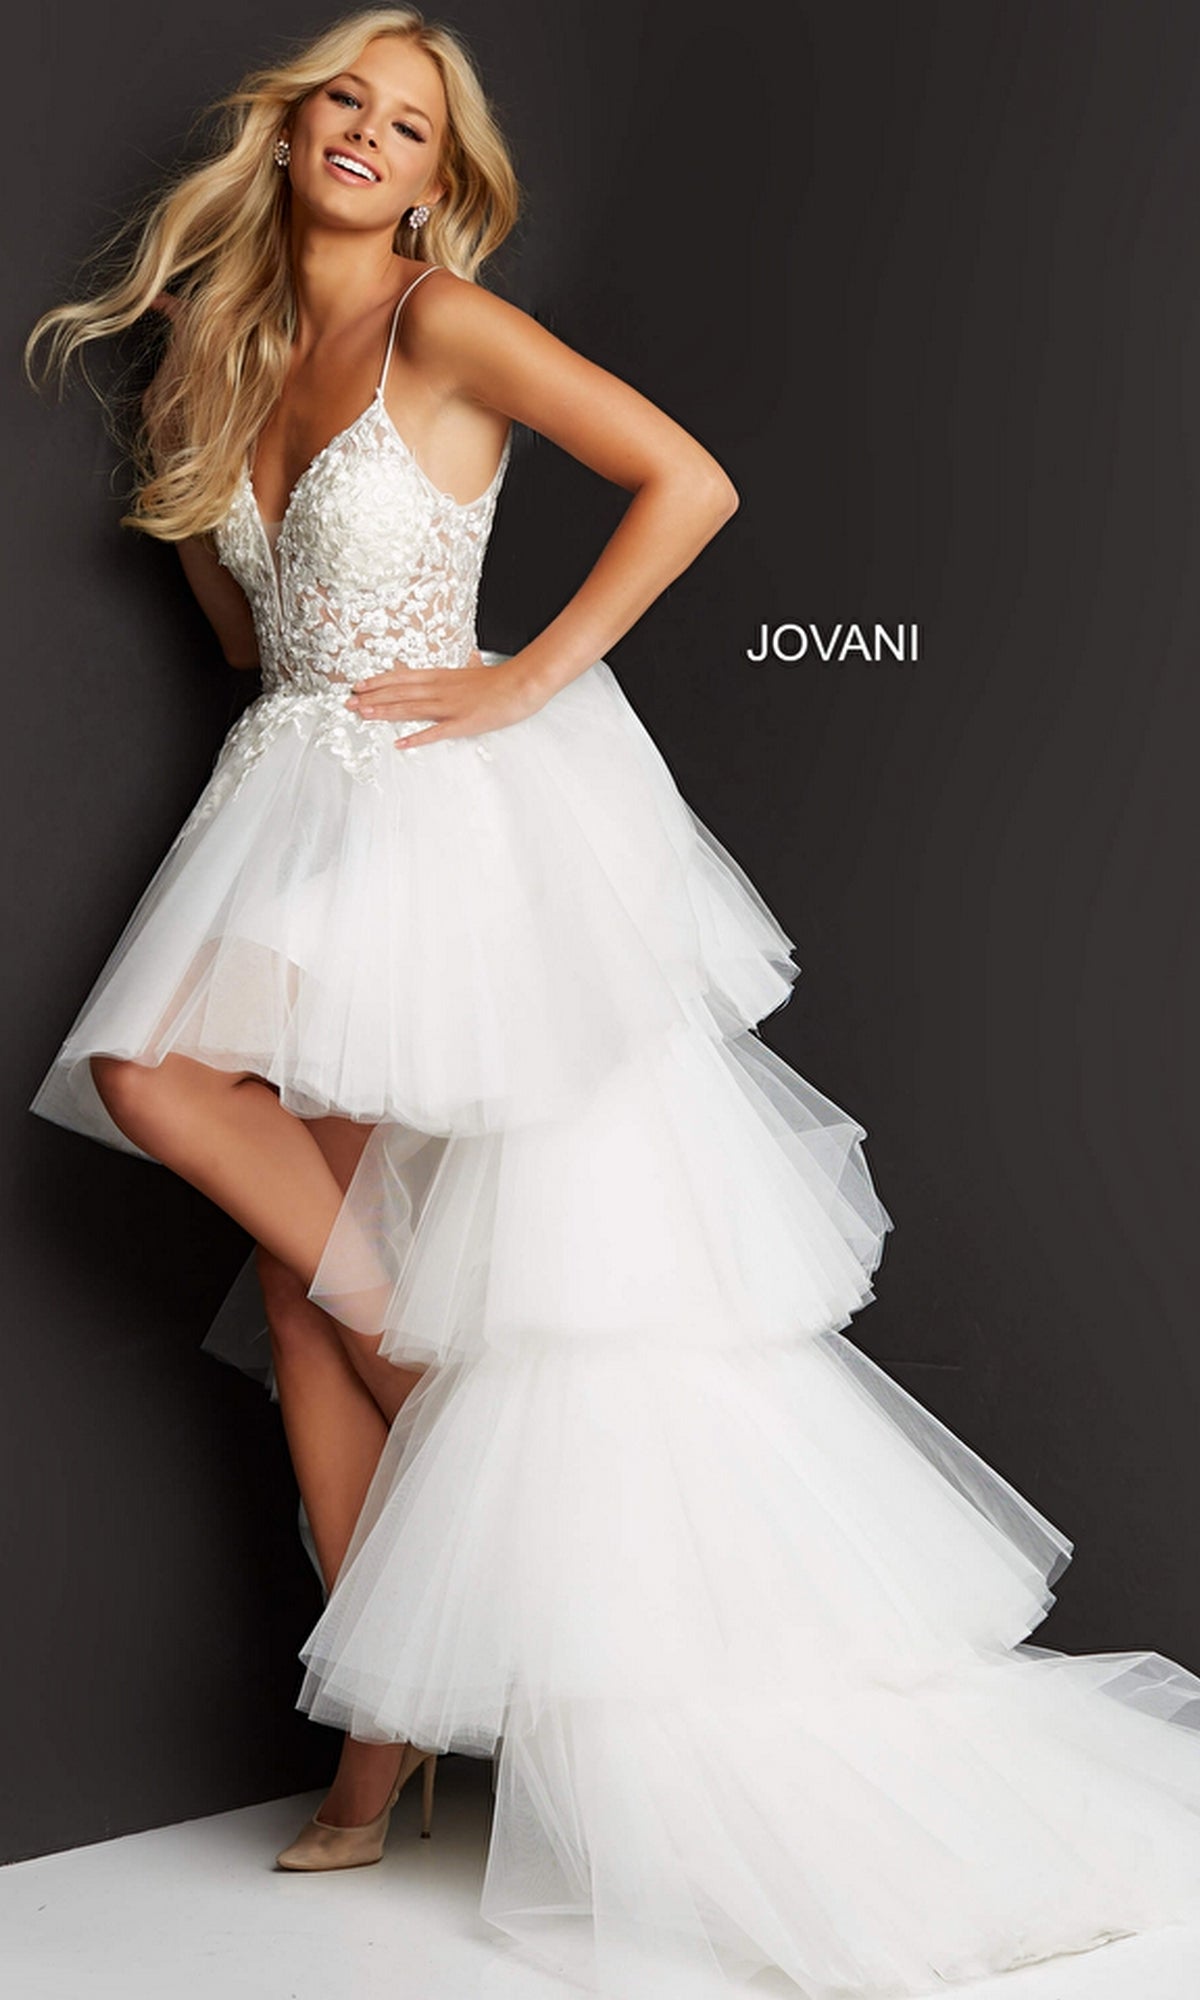 Ruffled High-Low Prom Dress 07263 by Jovani